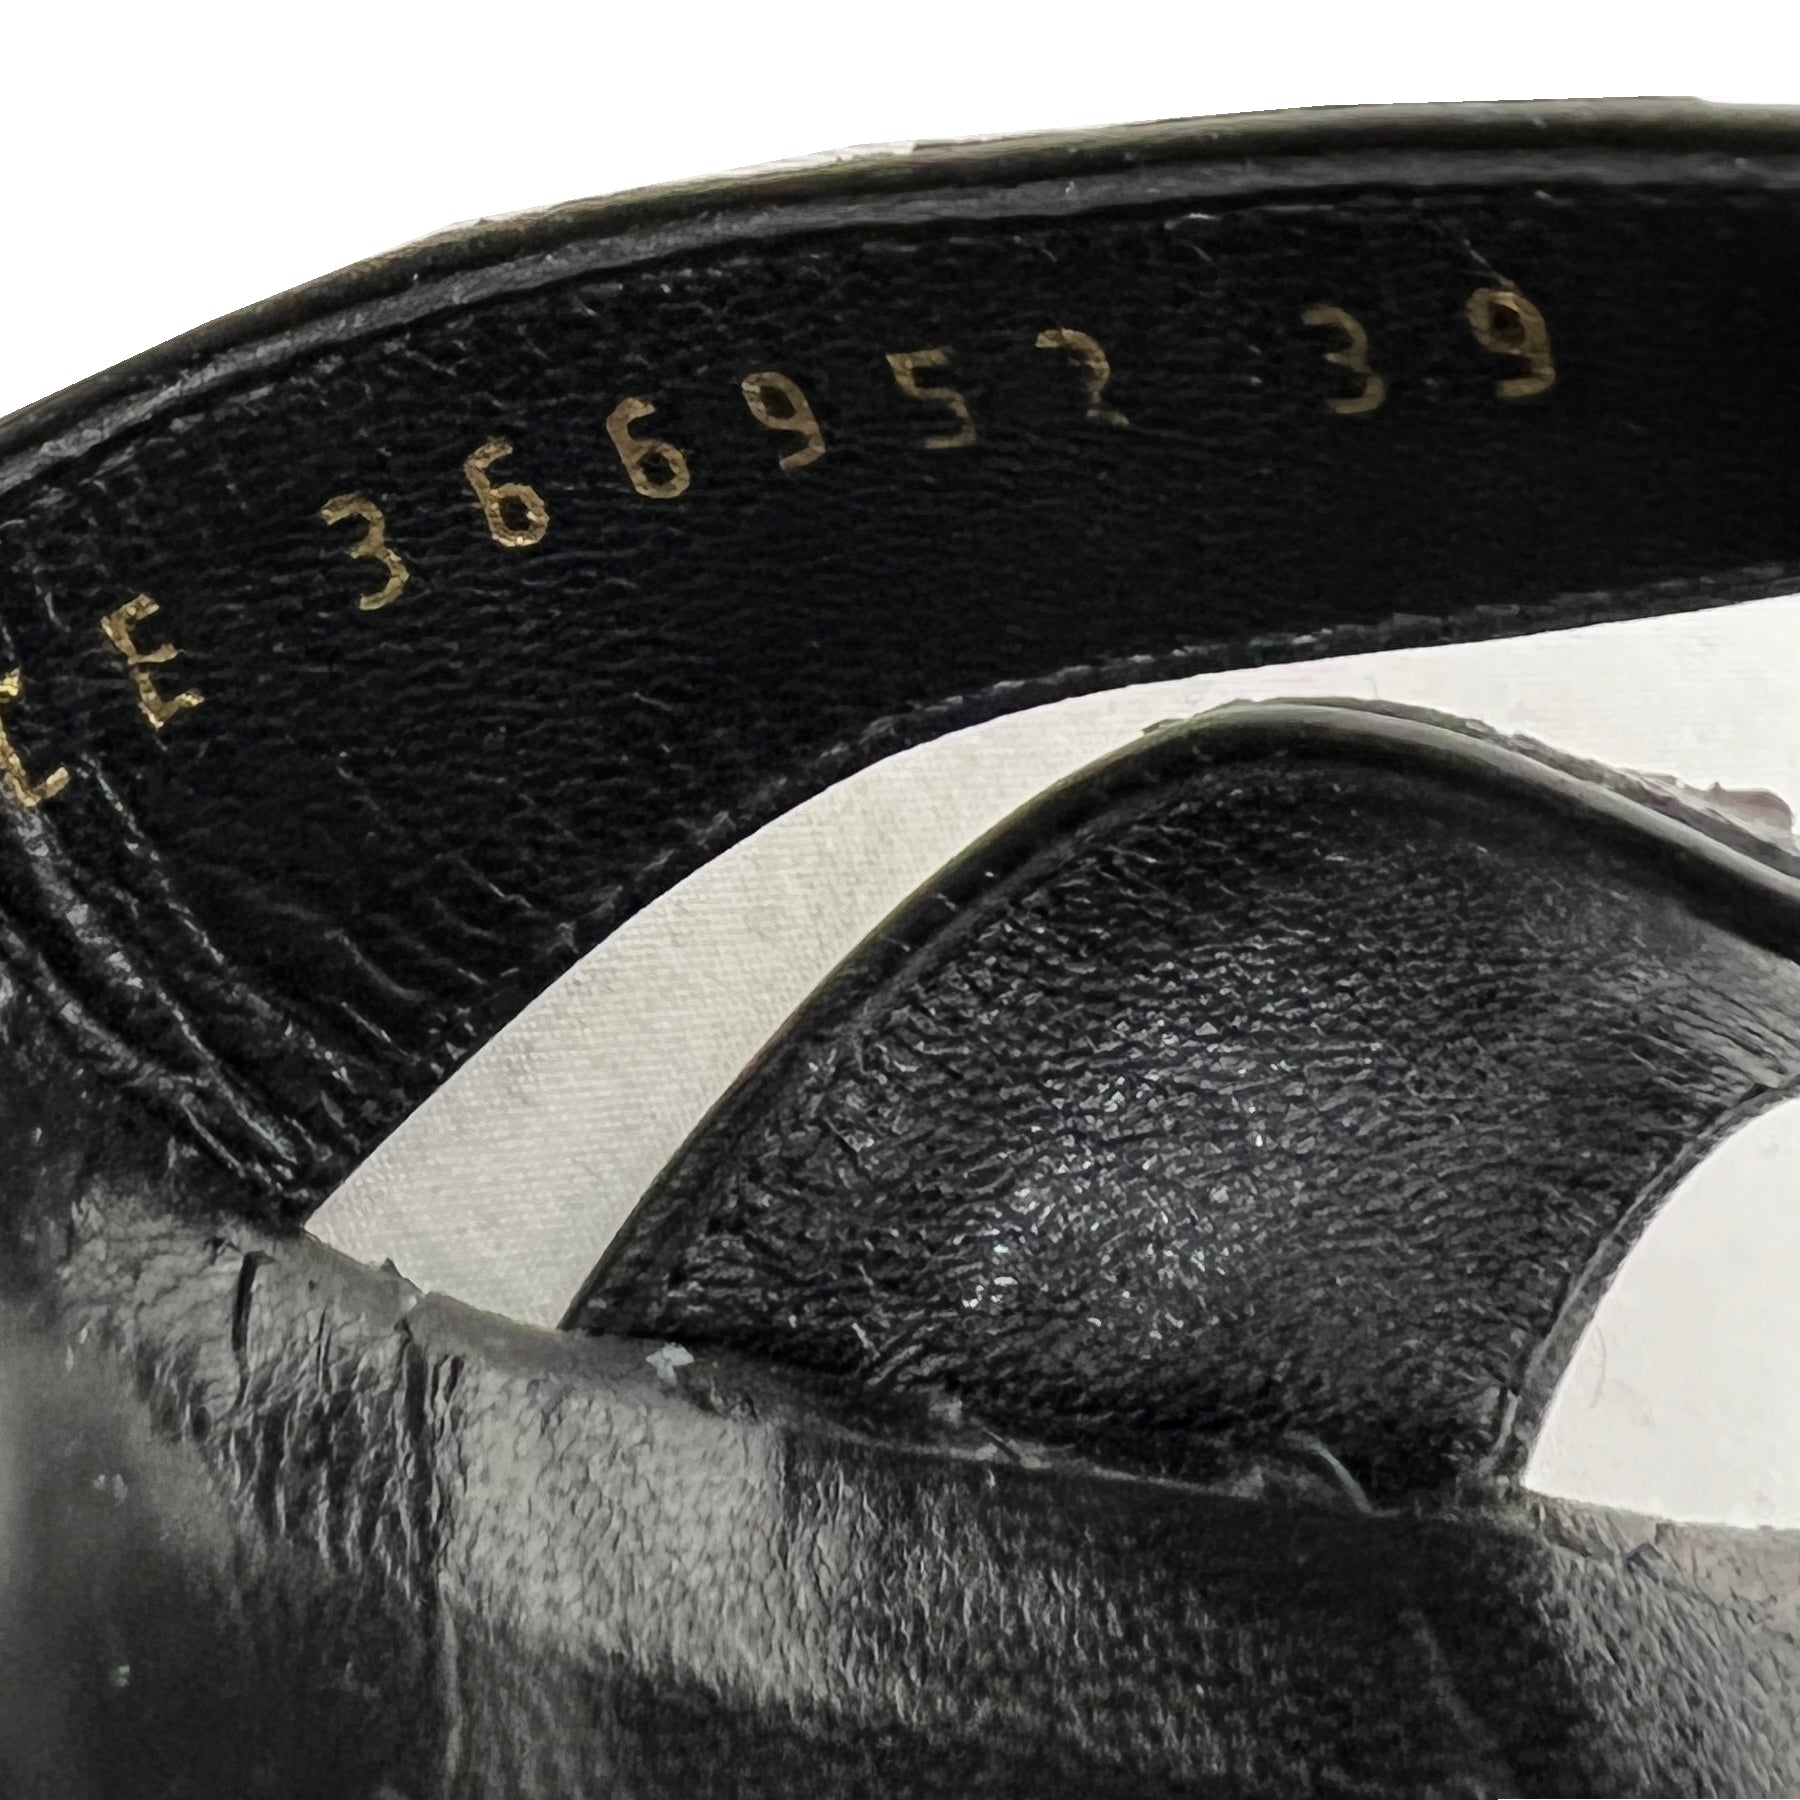 Aggregate more than 226 diesel men’s leather sandals super hot